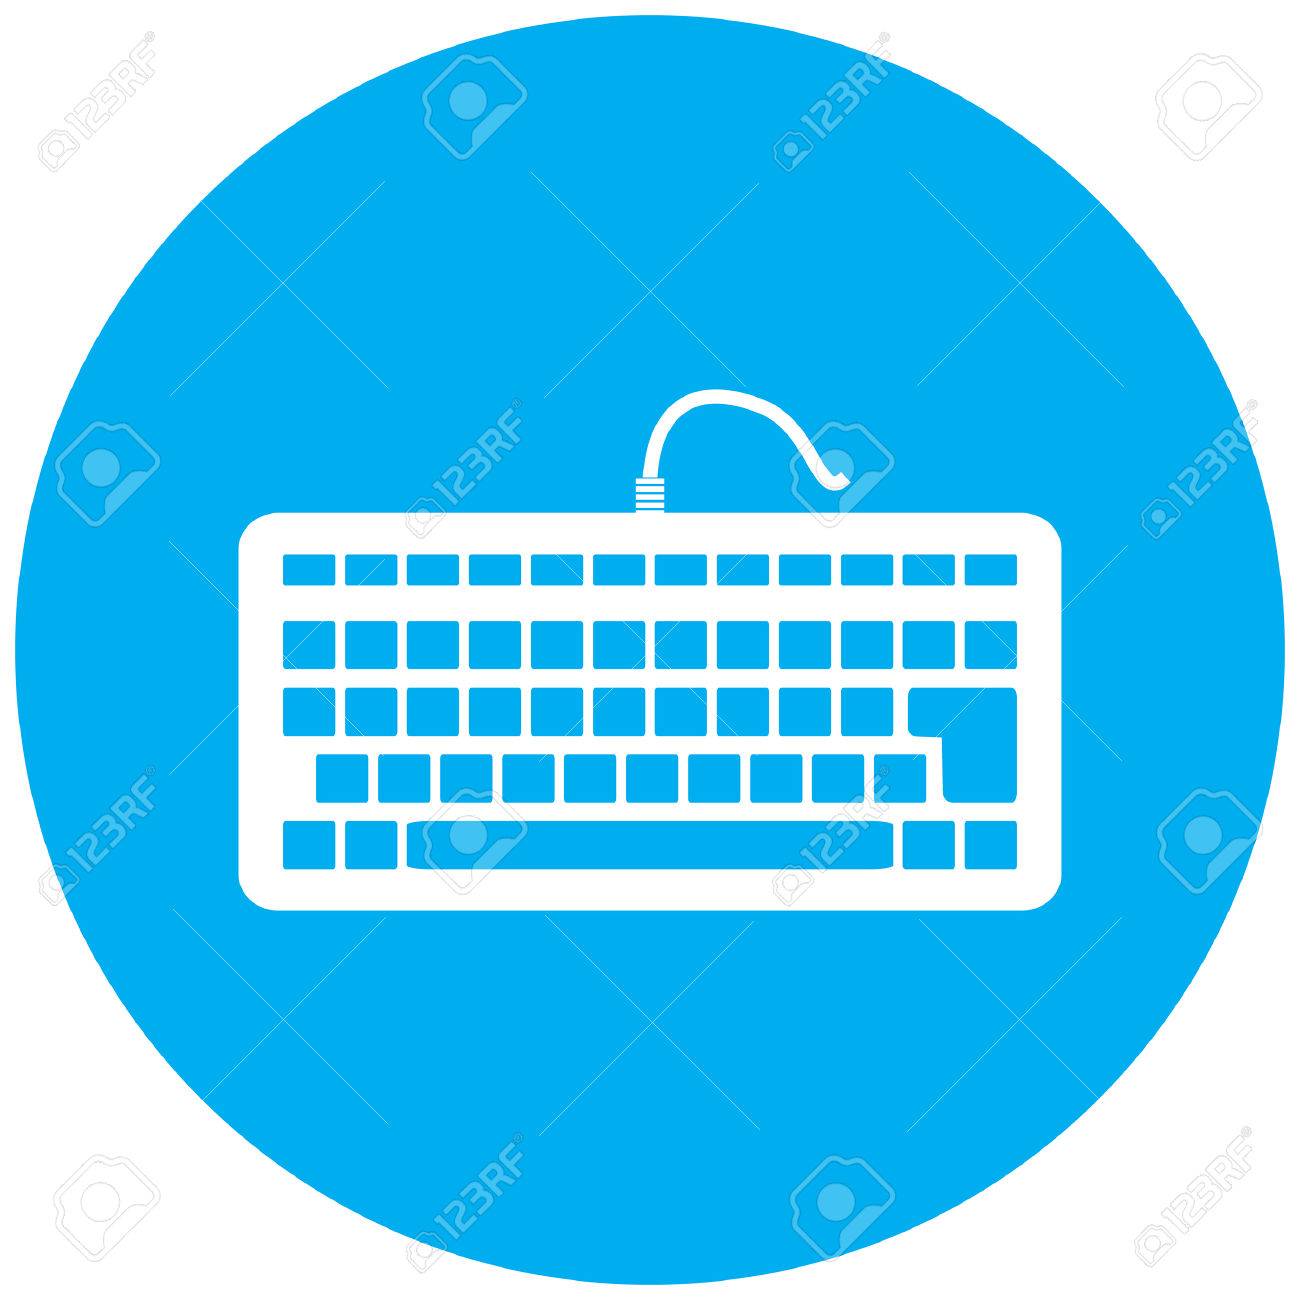 Keyboard Vector Icon Stock Vector 783296812 - 